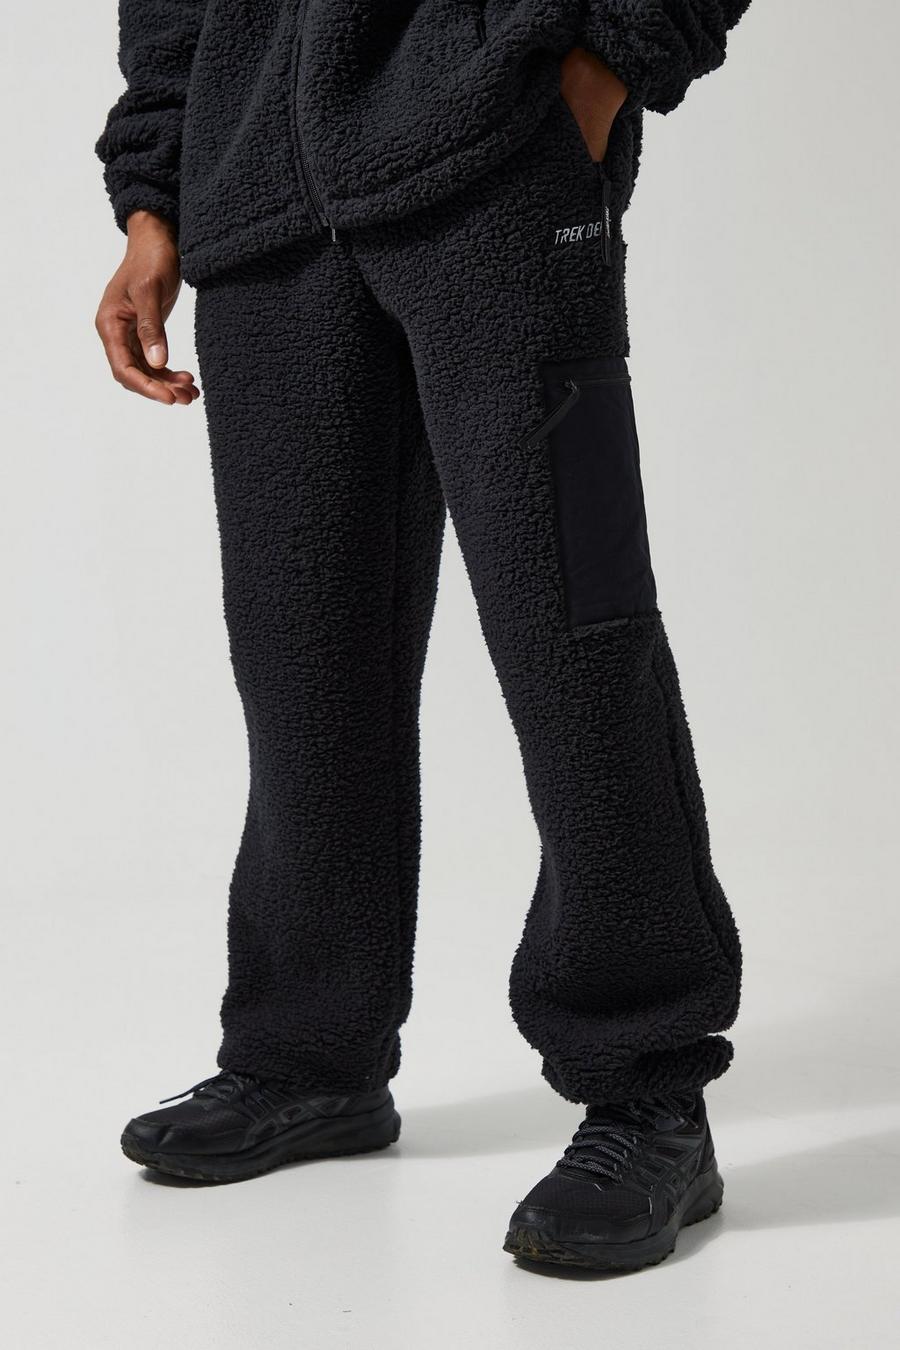 Pantaloni tuta oversize Active Trek in pile borg con polsini alle caviglie, Black image number 1